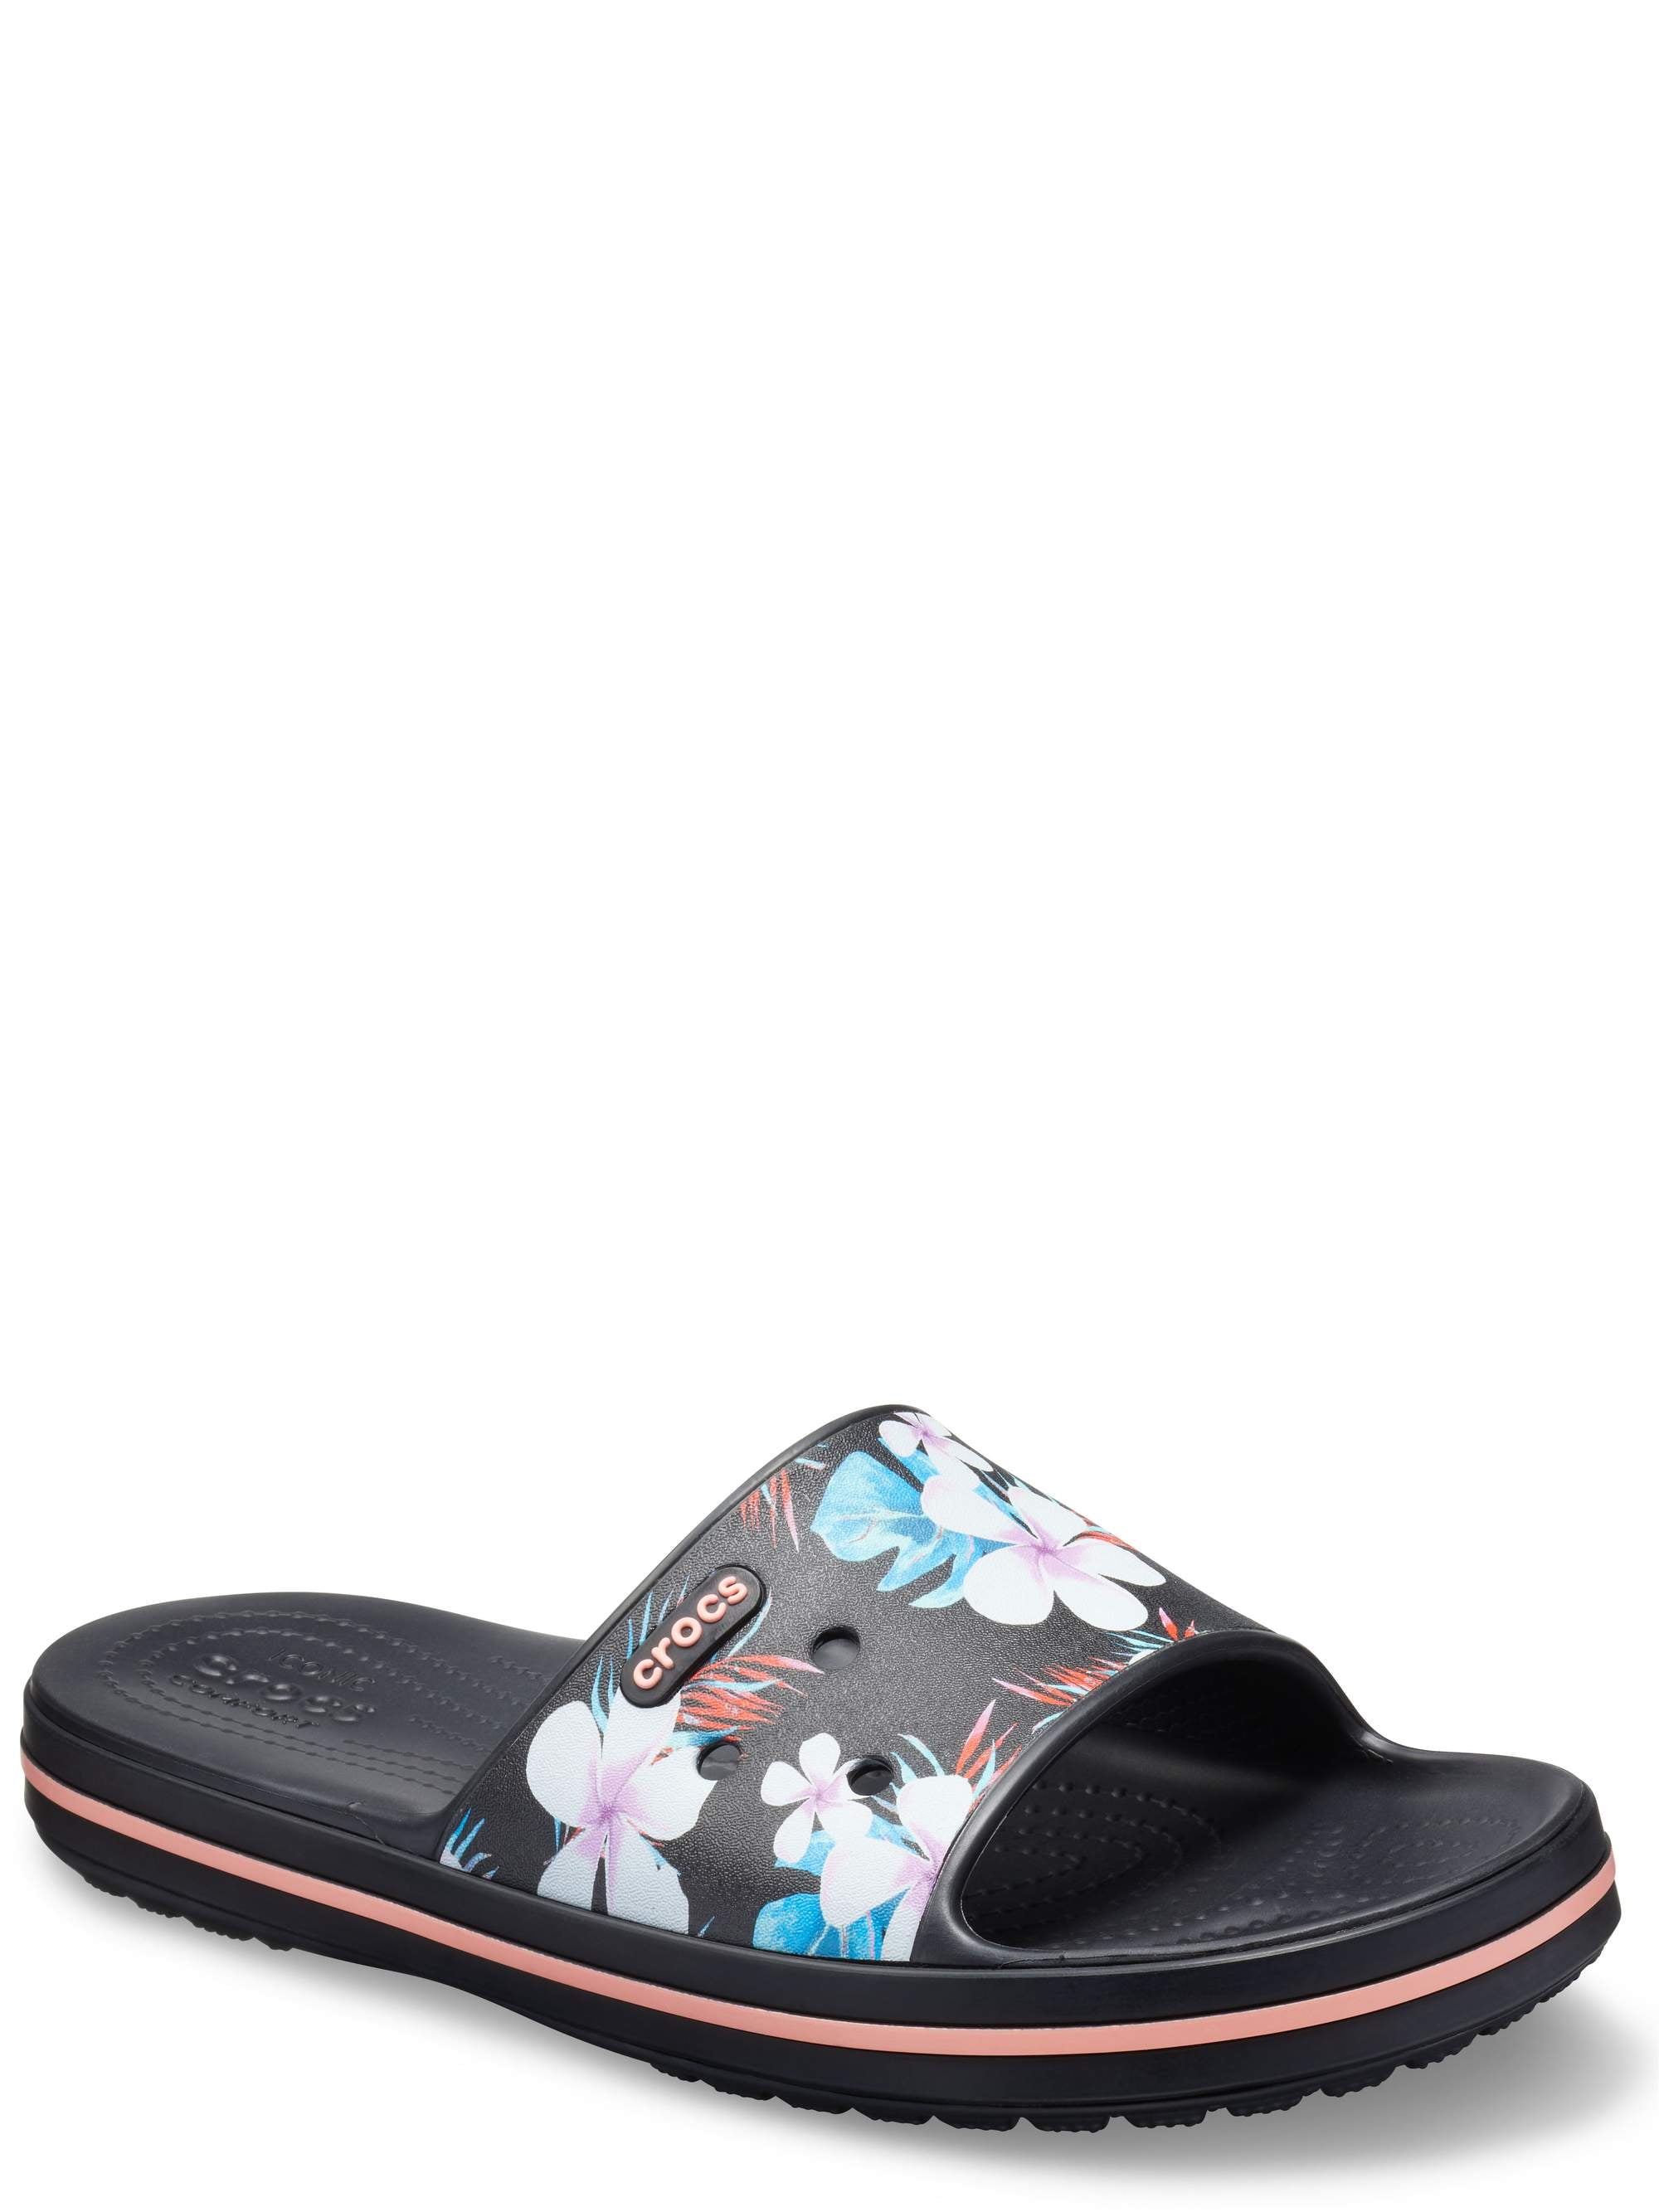 Crocs 205583 CROCBAND SEASONAL GRAPHIC Ladies Womens Slide Sandals Black/Floral 